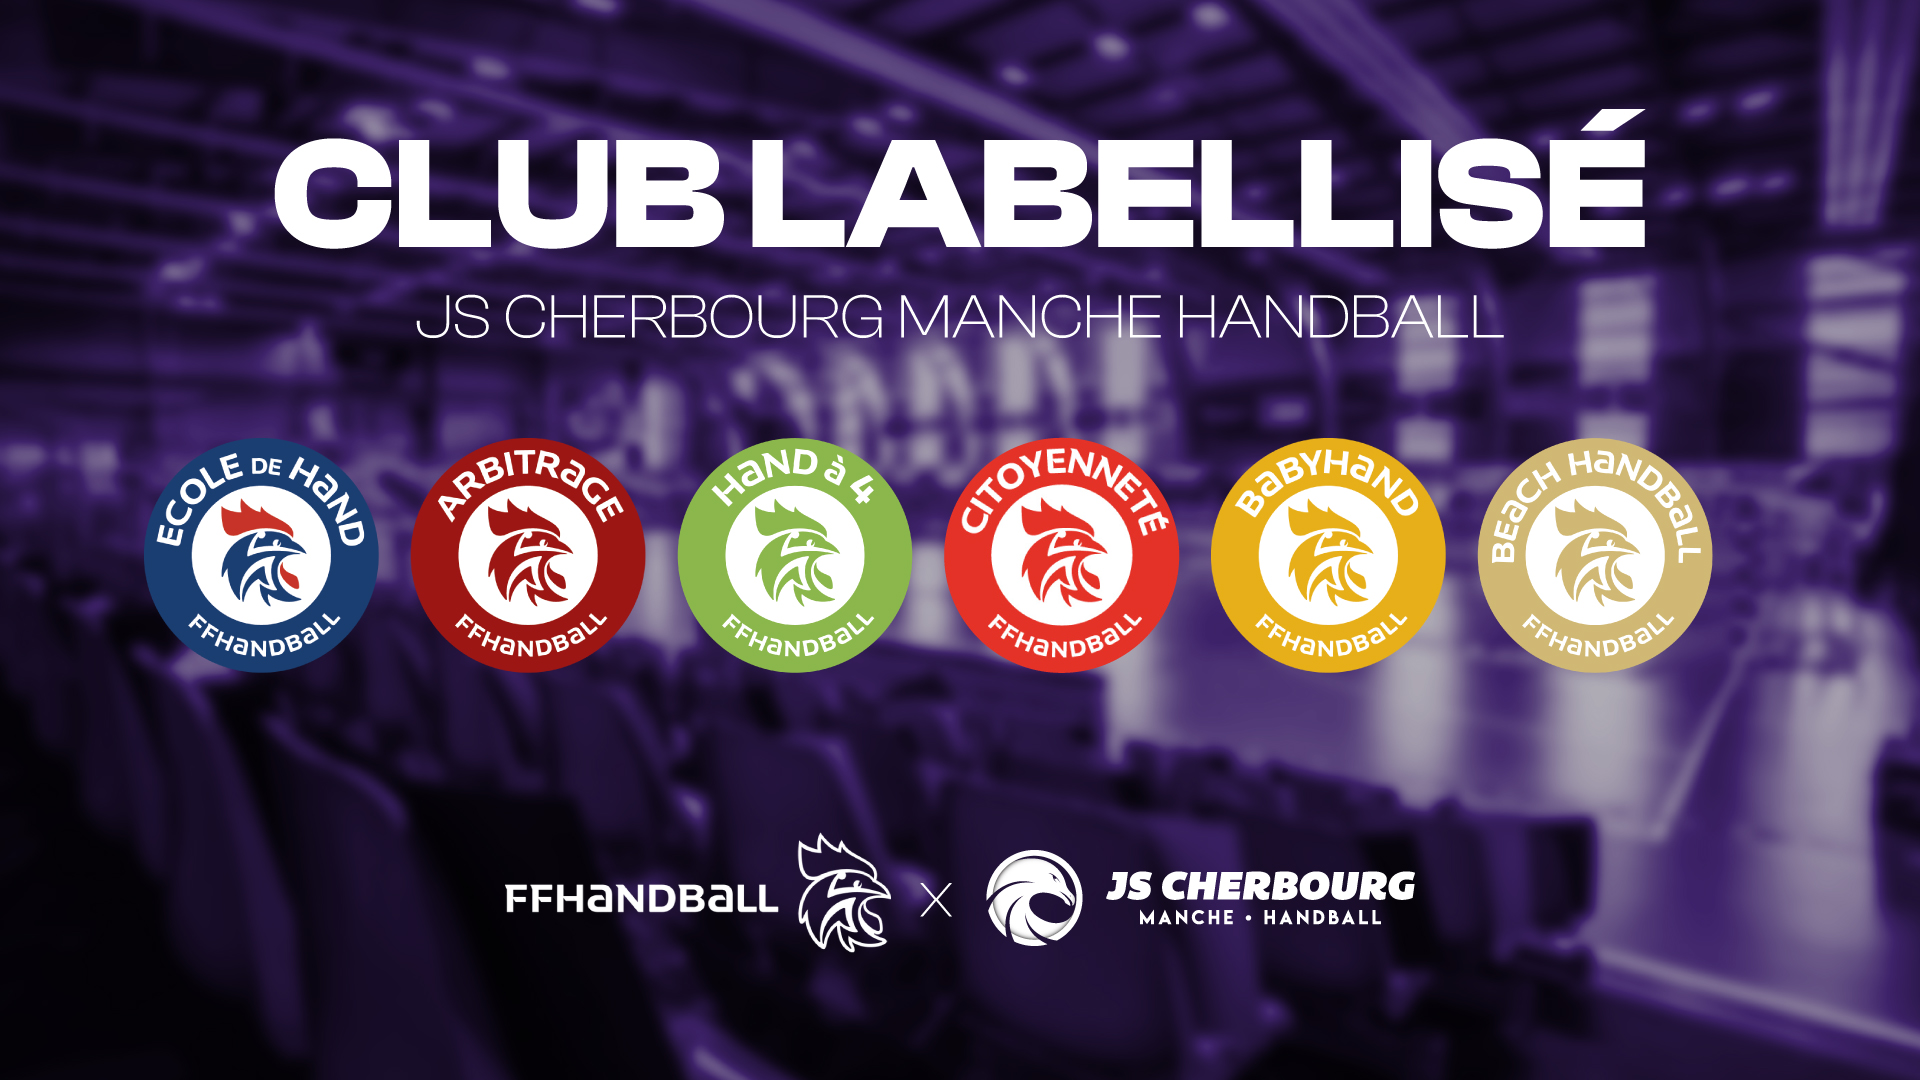 Porte clé  JS Cherbourg Manche Handball